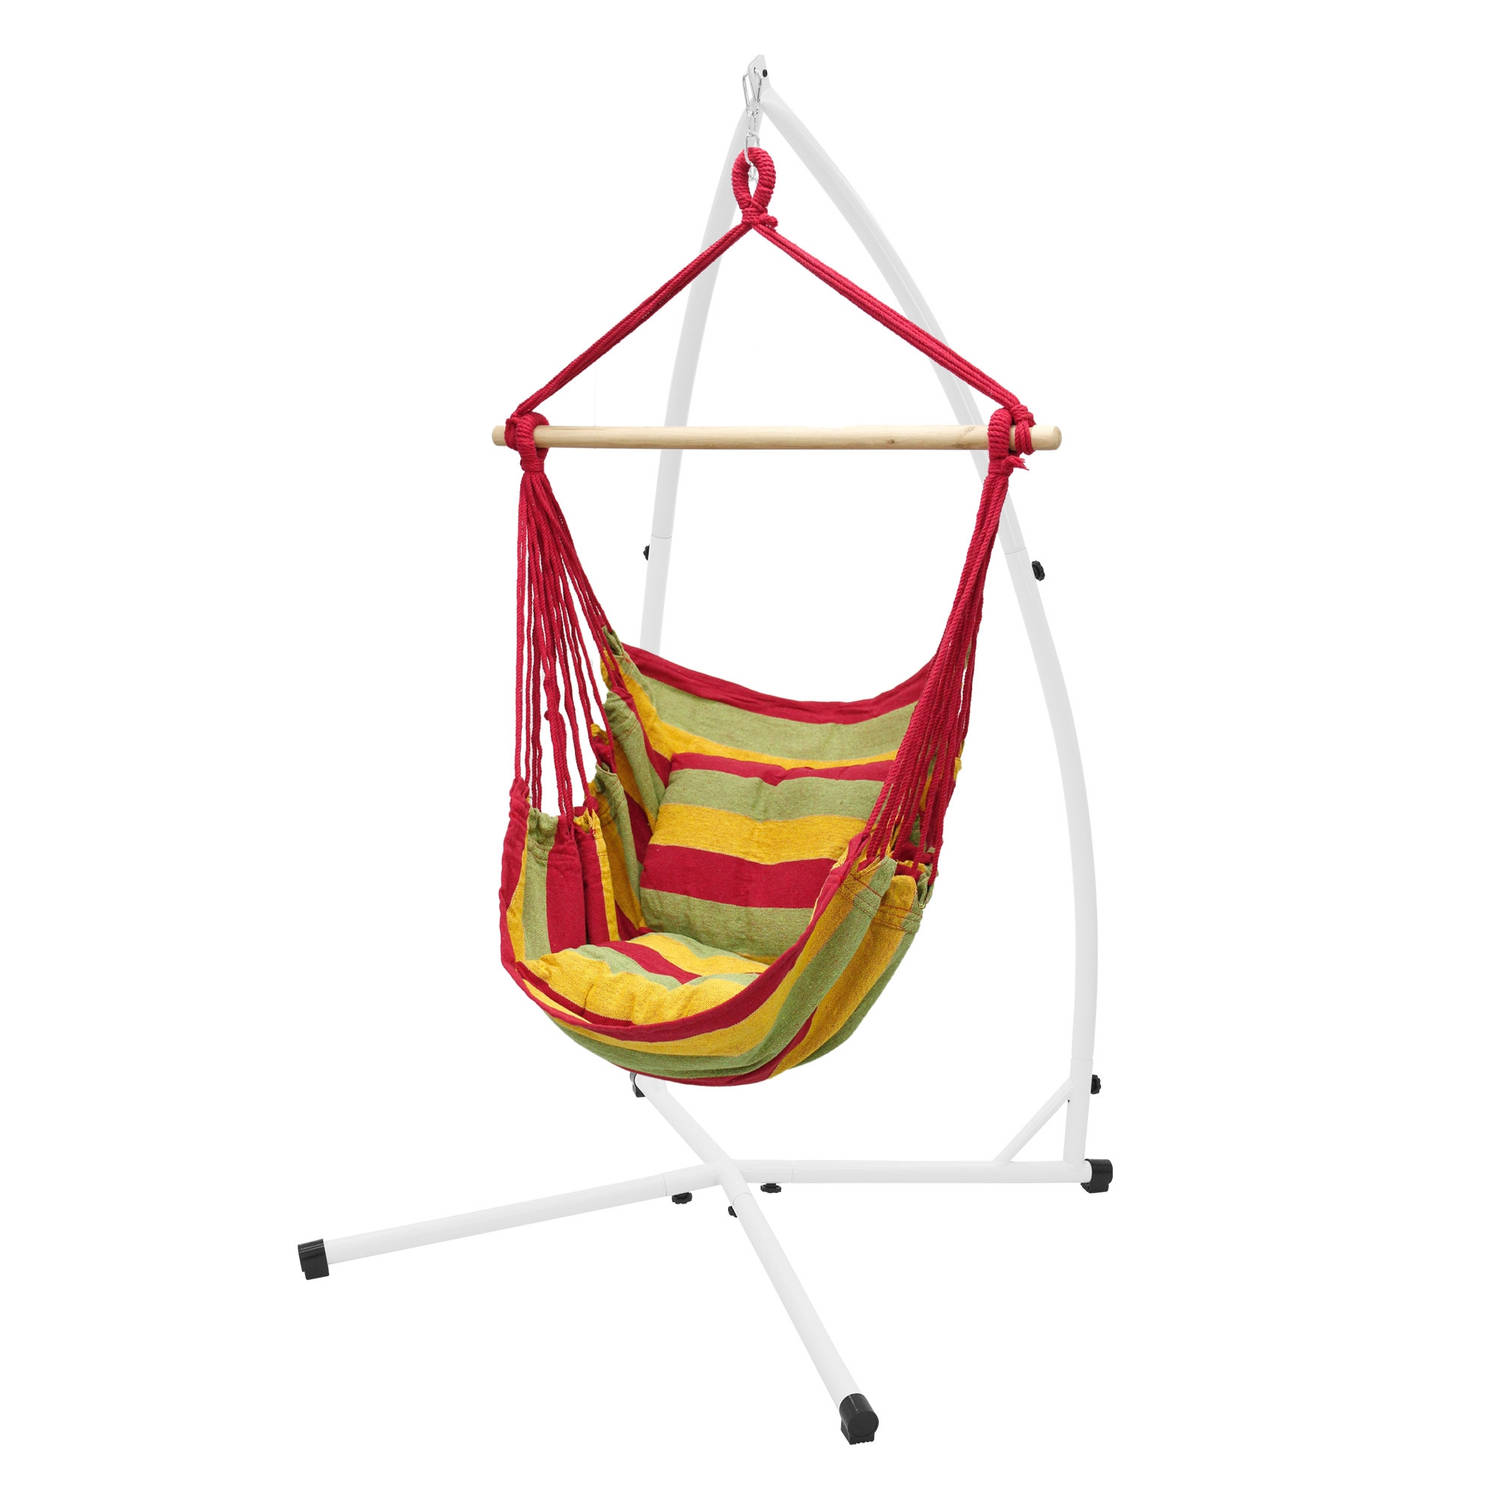 Hangstoel van katoen/hard hout, rood/groen/geel, belastbaar tot 120 kg met metalen frame 210 cm incl. twee kussens